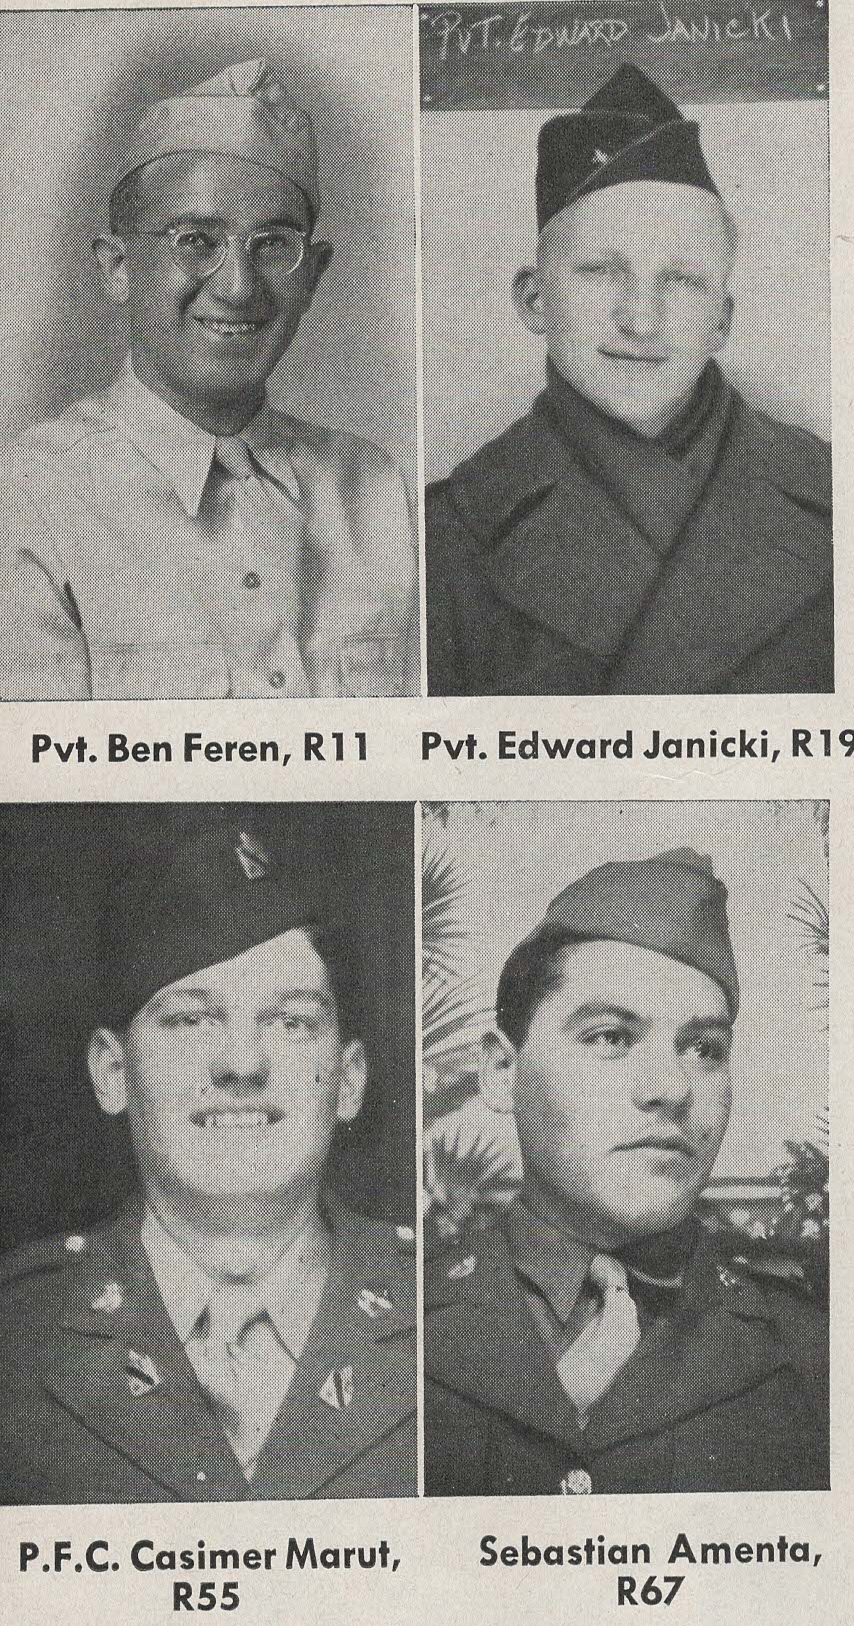 L-R and Top-Bottom: Pvt. Ben Feren, Pvt. Edward Janicki, P.F.C. Casimer Marut, Sebastian Amenta